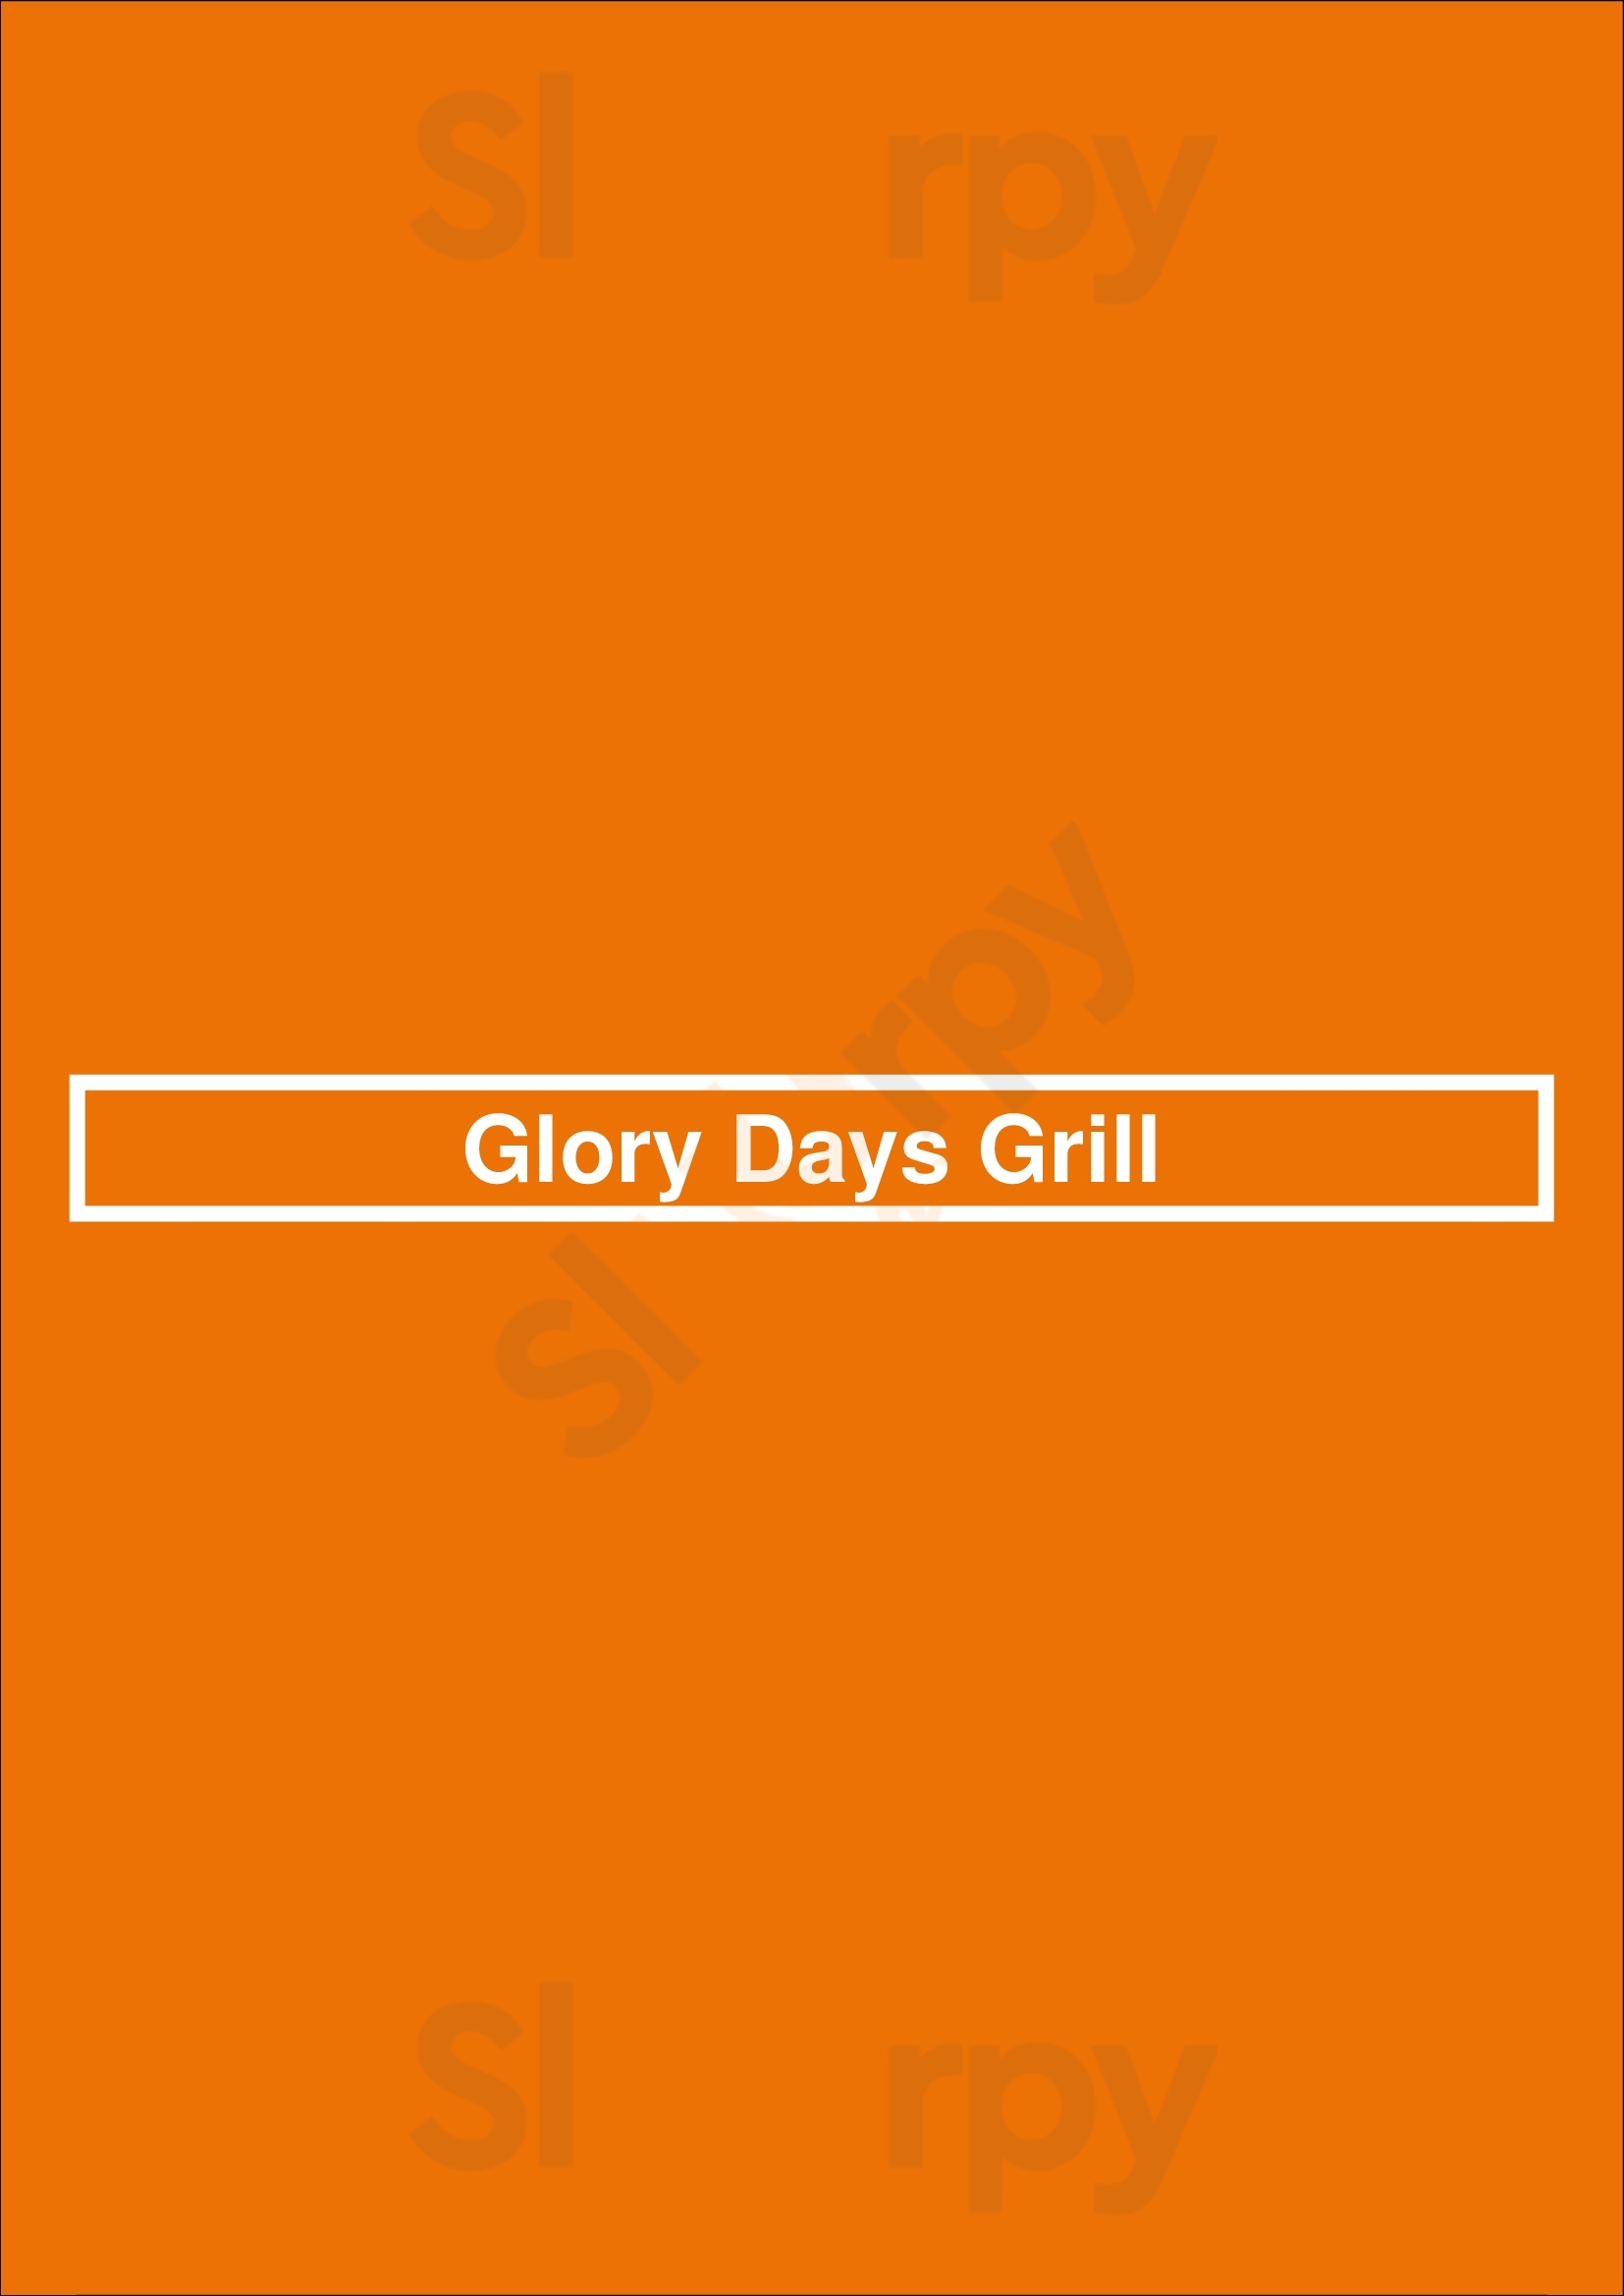 Glory Days Grill Tampa Menu - 1